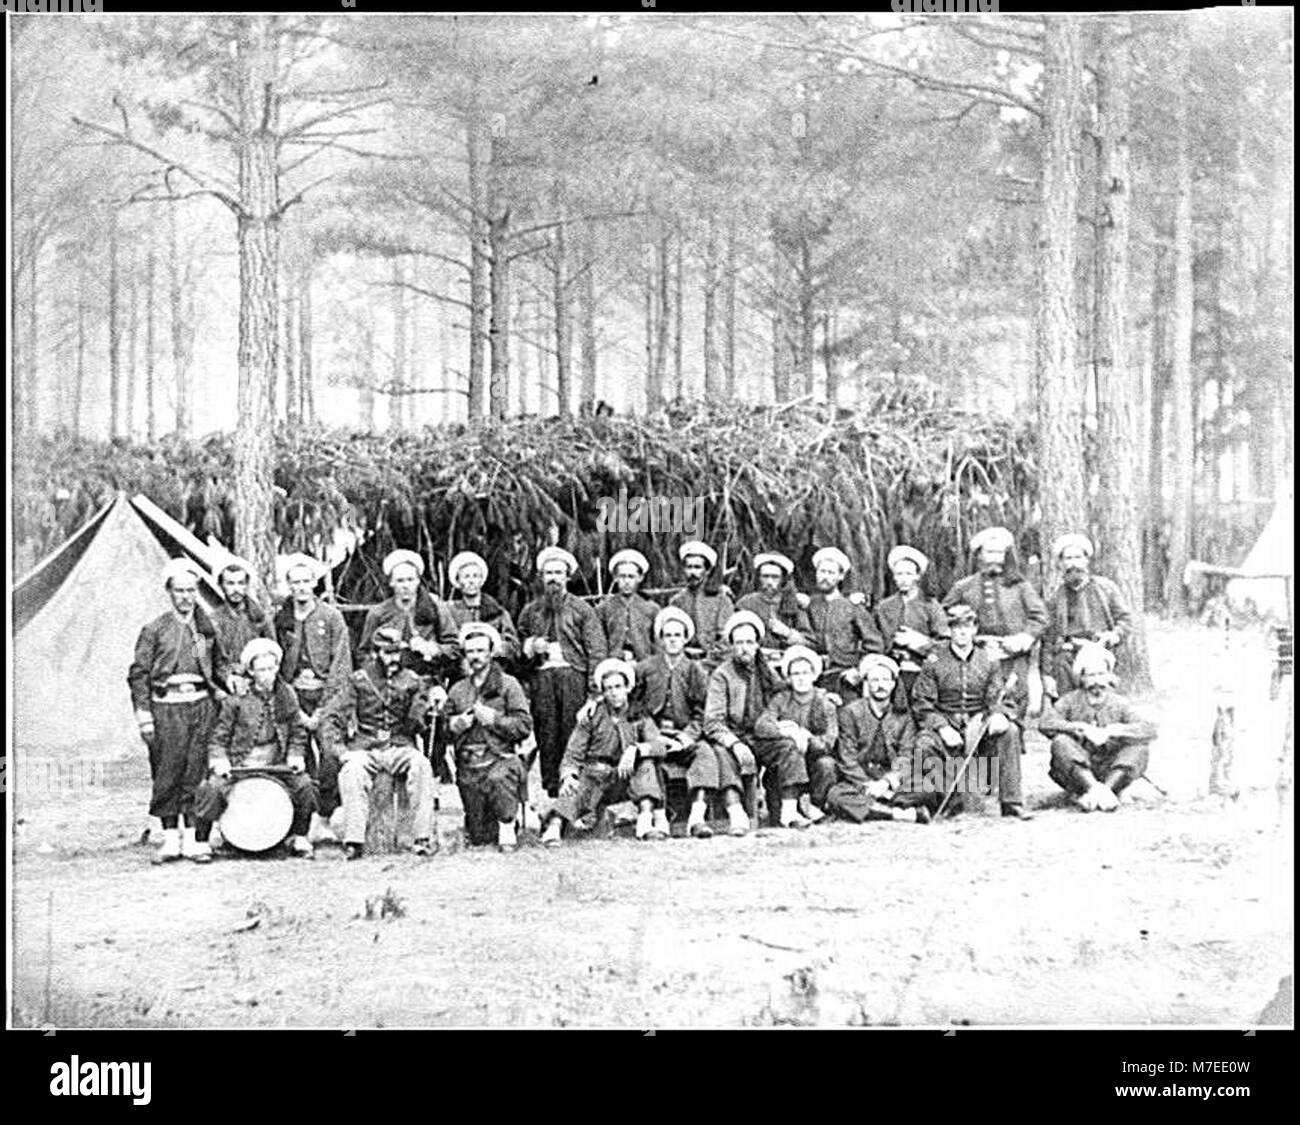 Petersburg, Va. Company H, 114th Pennsylvania Infantry (Zouaves) LOC cwpb.03688 Stock Photo